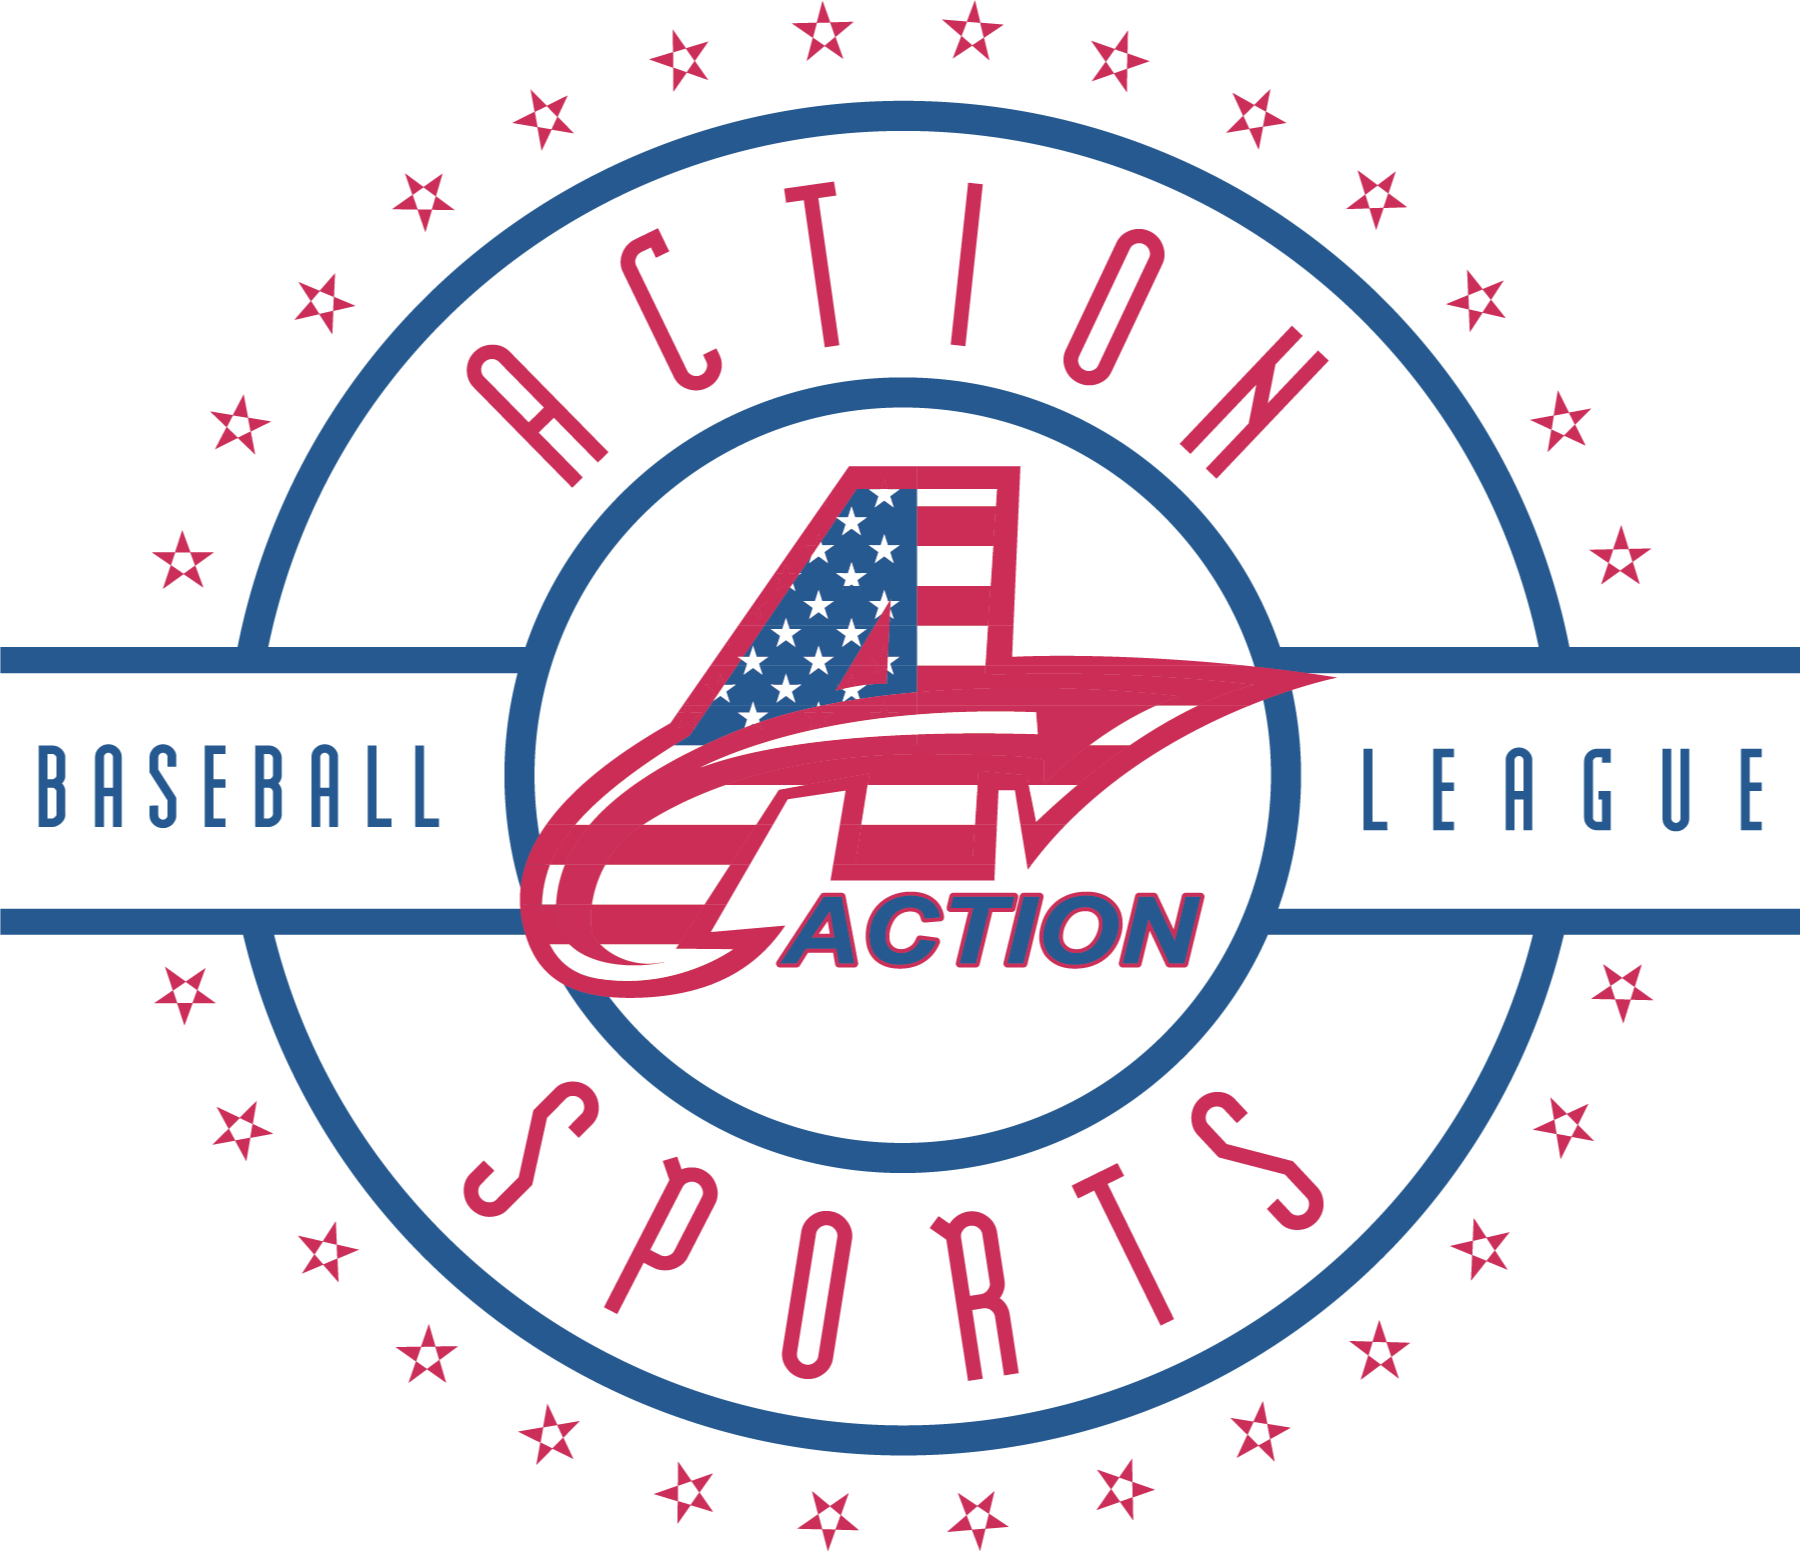 2023 Action Baseball League Dayton Oh 03 28 2022 1690301240 